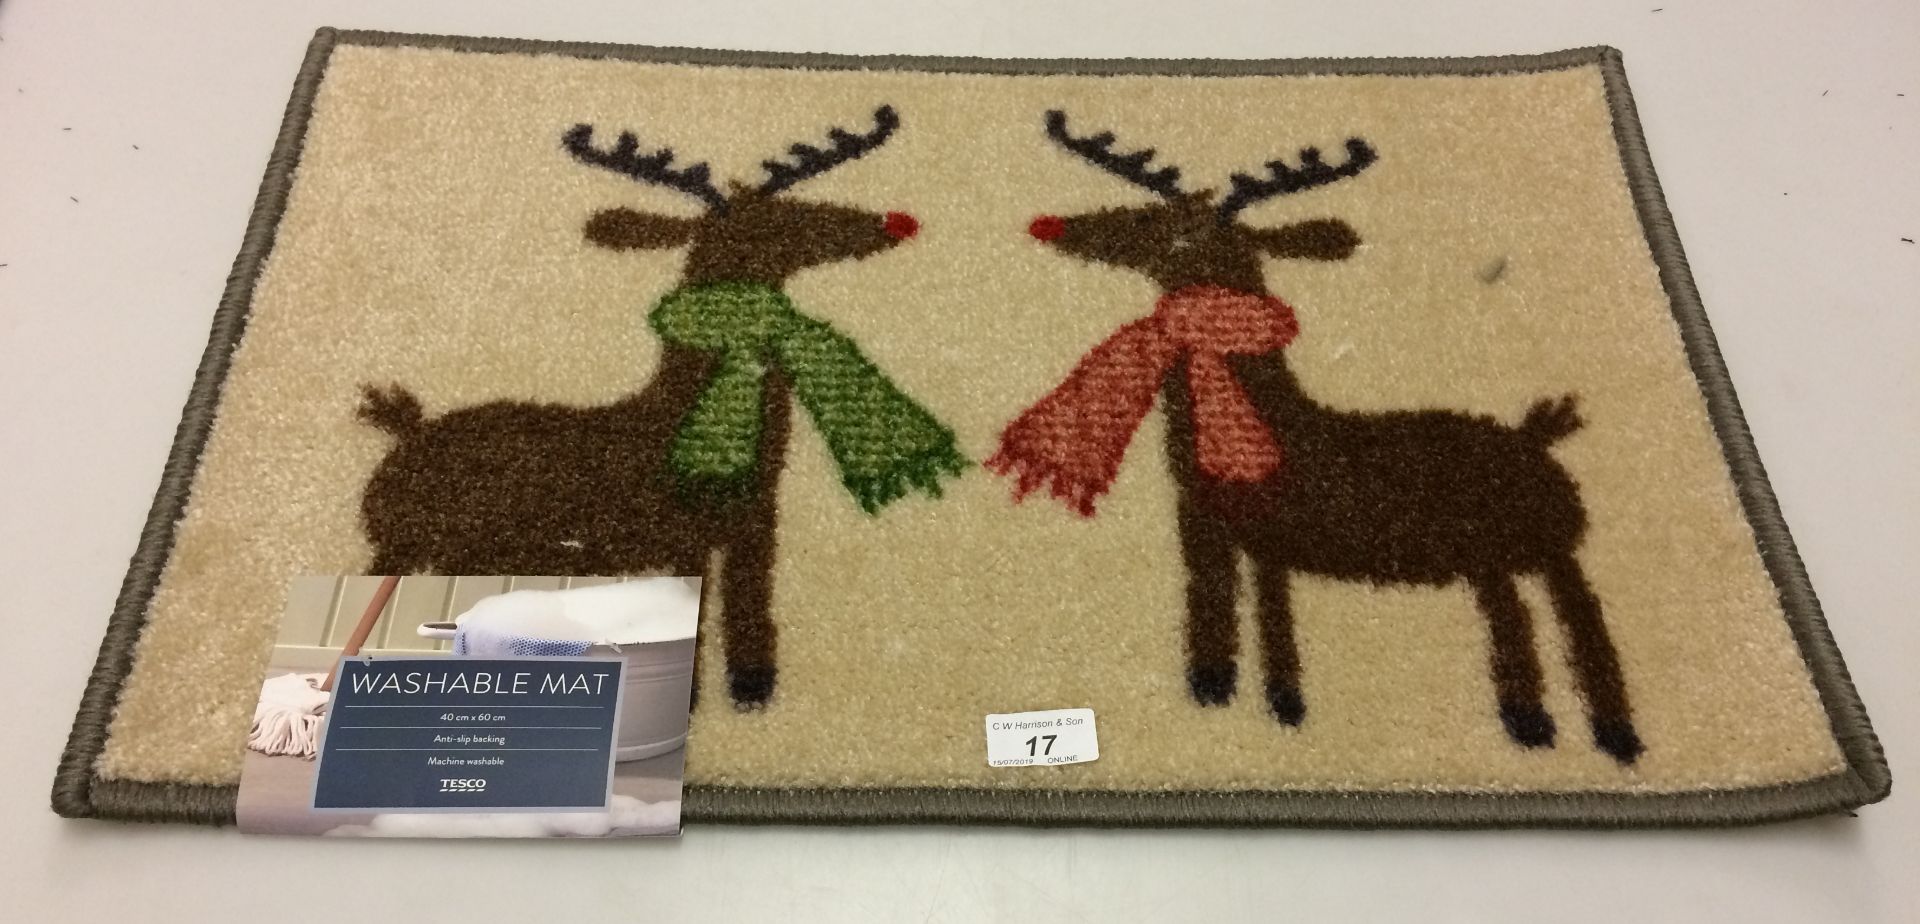 10 x Tesco reindeer washable door mats 40 x 60cm with anti-slip backing